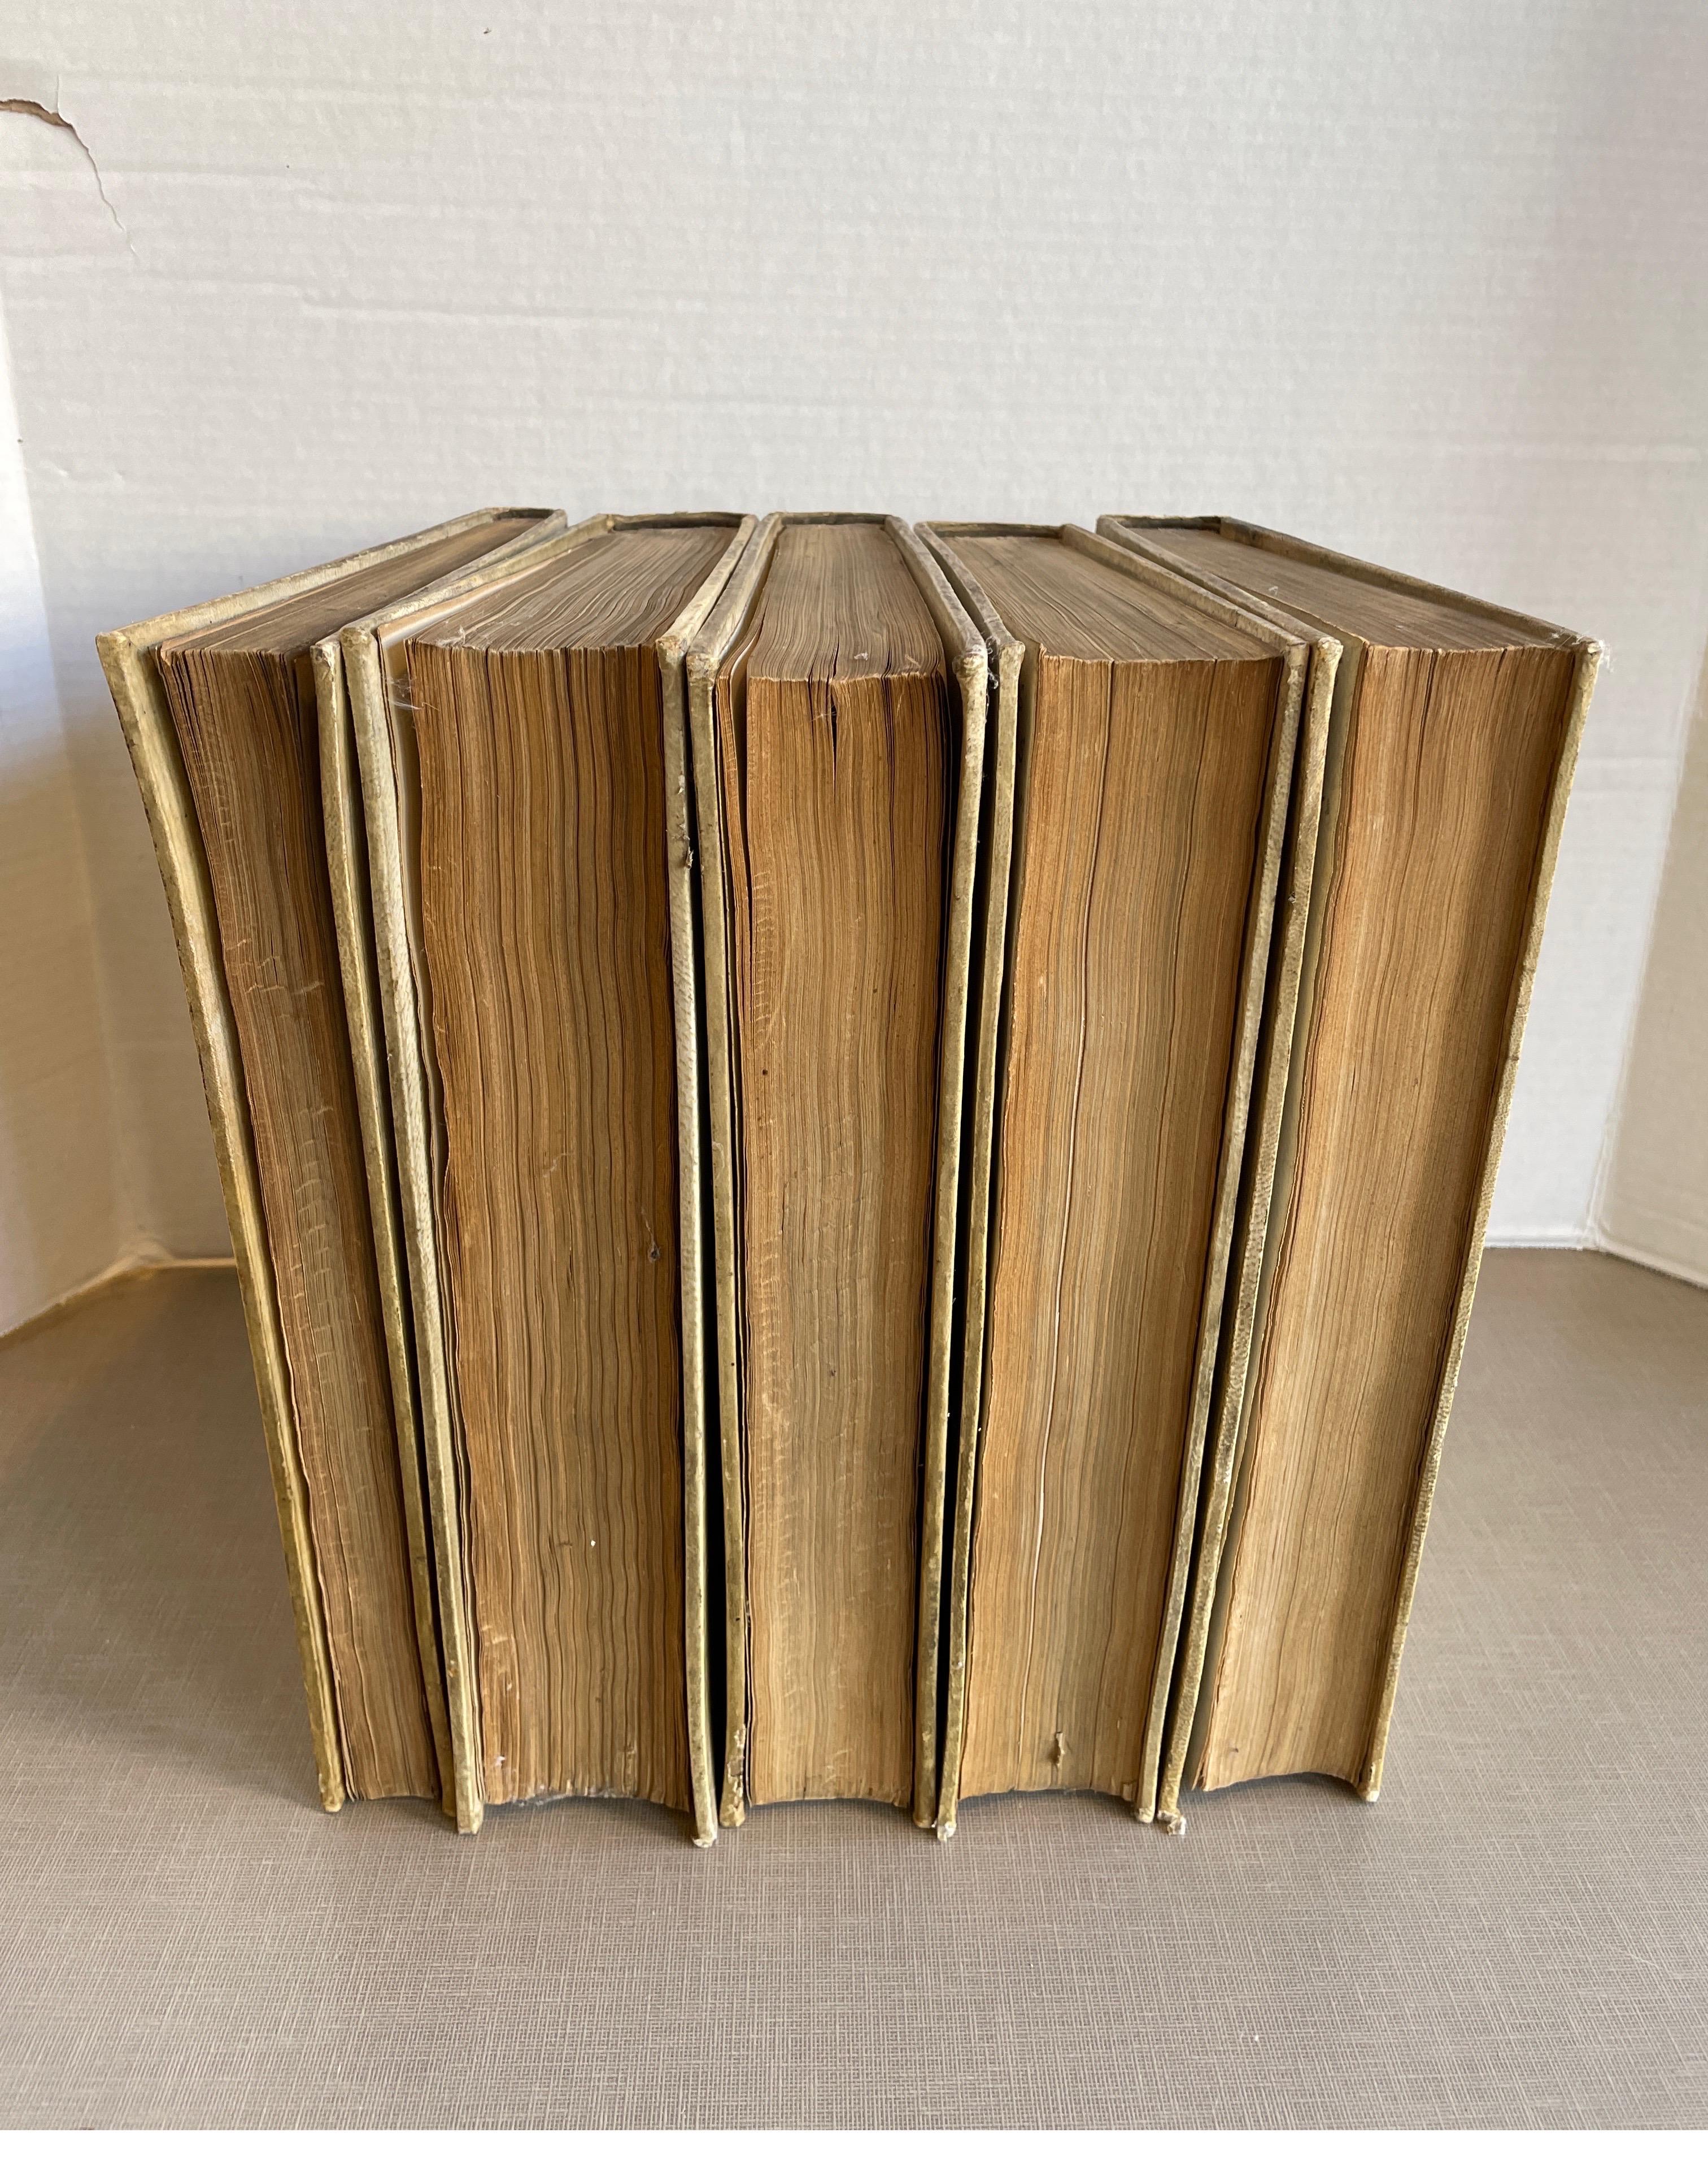 Set of 5 Fabri Concionum opus vellum books from 1872 In Fair Condition For Sale In Chicago, IL